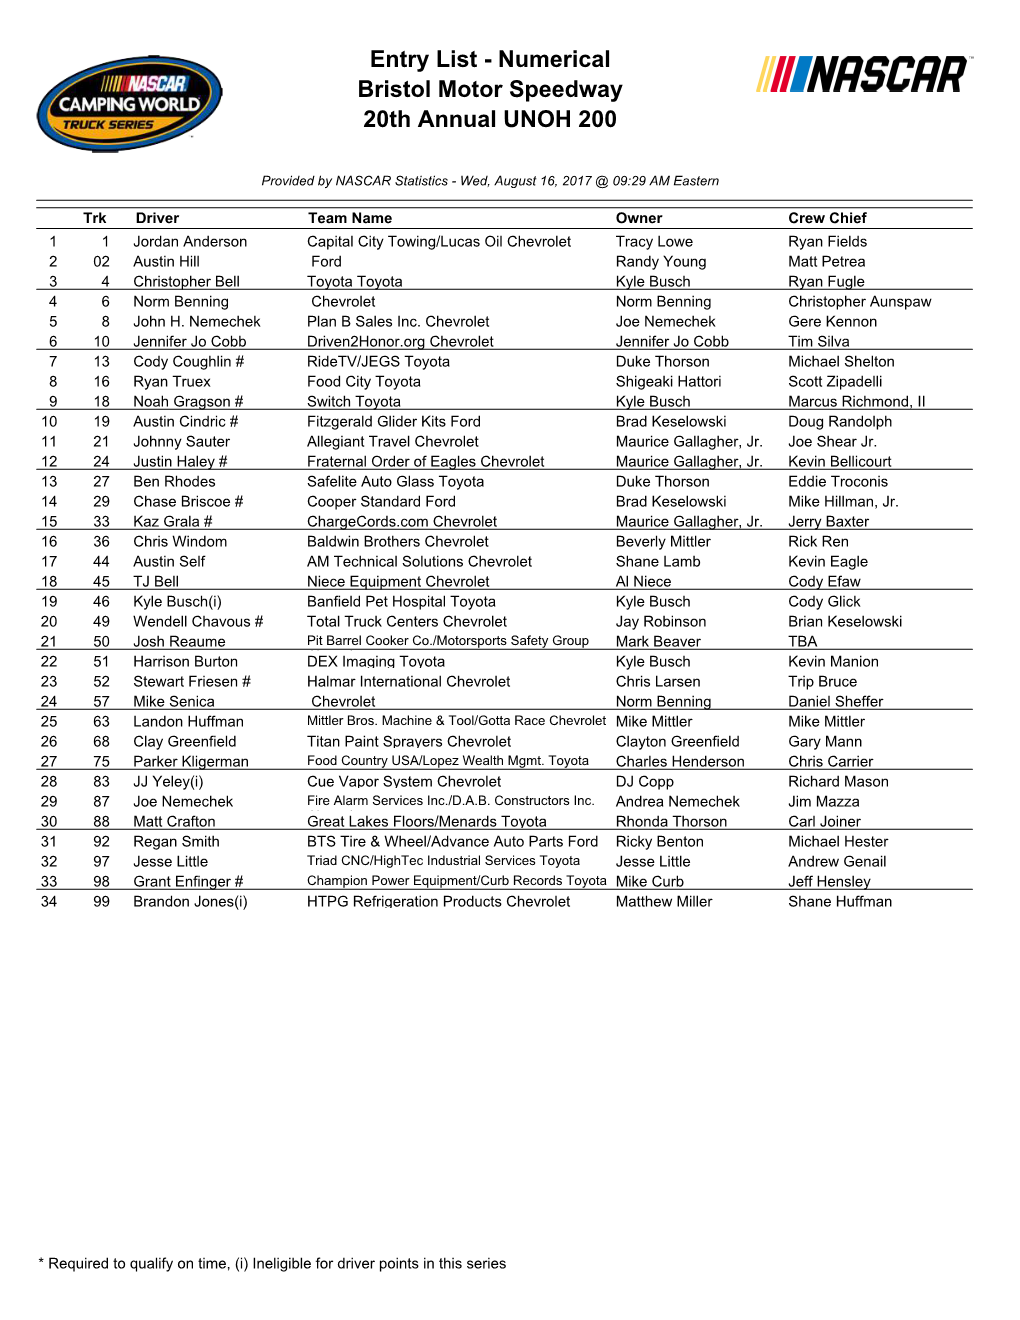 Entry List - Numerical Bristol Motor Speedway 20Th Annual UNOH 200